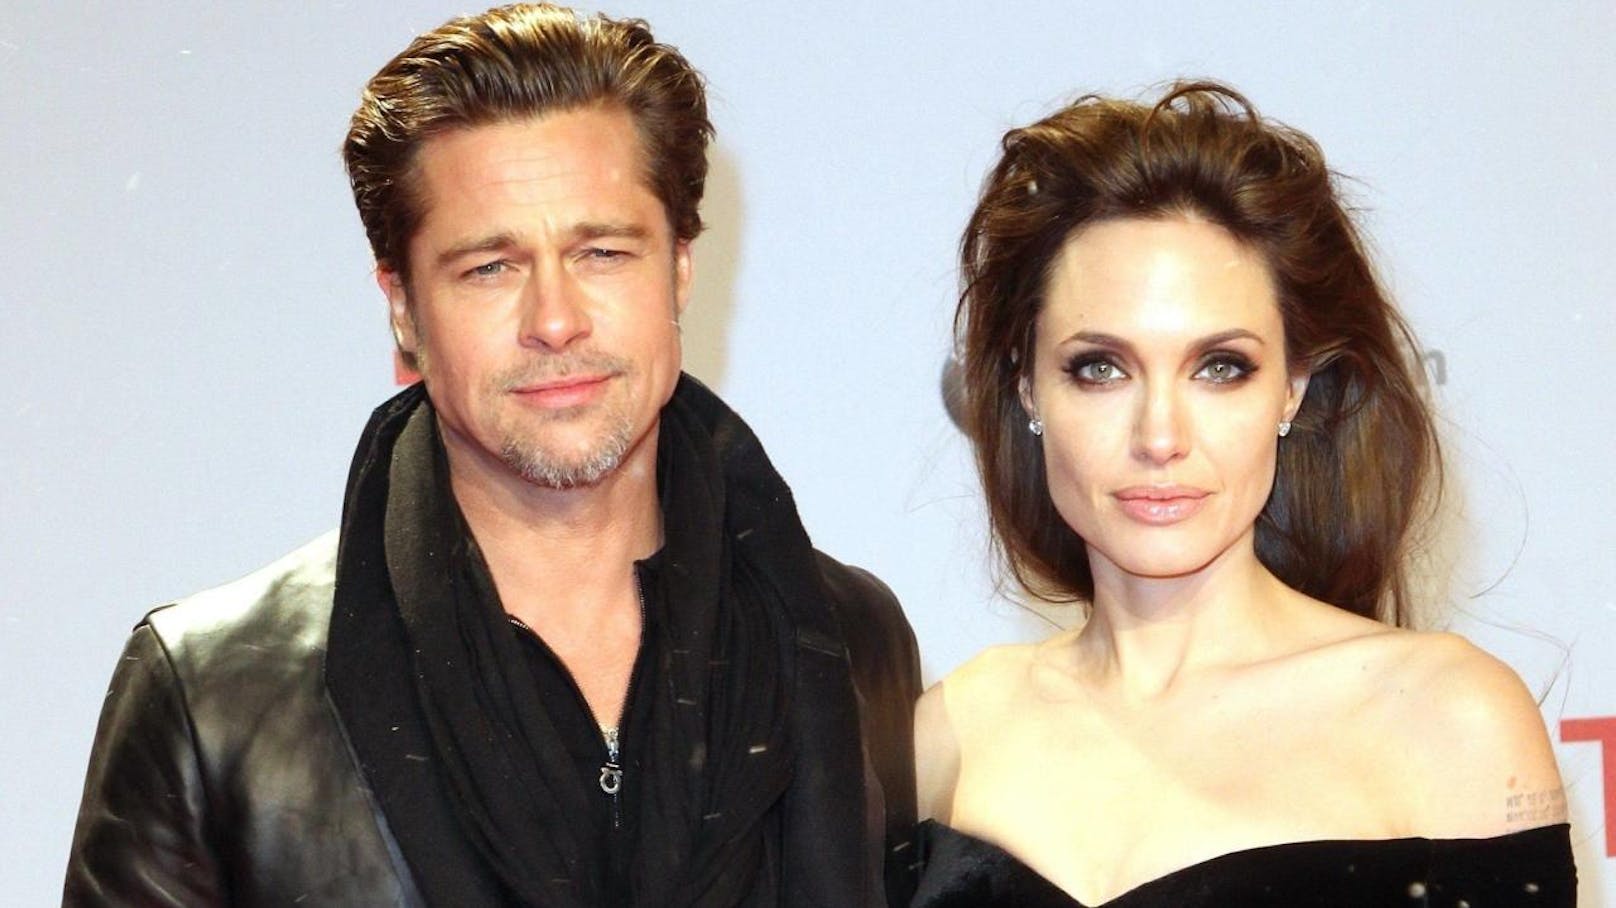 Das einstige Hollywood-Traumpaar <strong>Brad Pitt</strong> und <strong>Angelina Jolie</strong> im Jahr 2010.&nbsp;